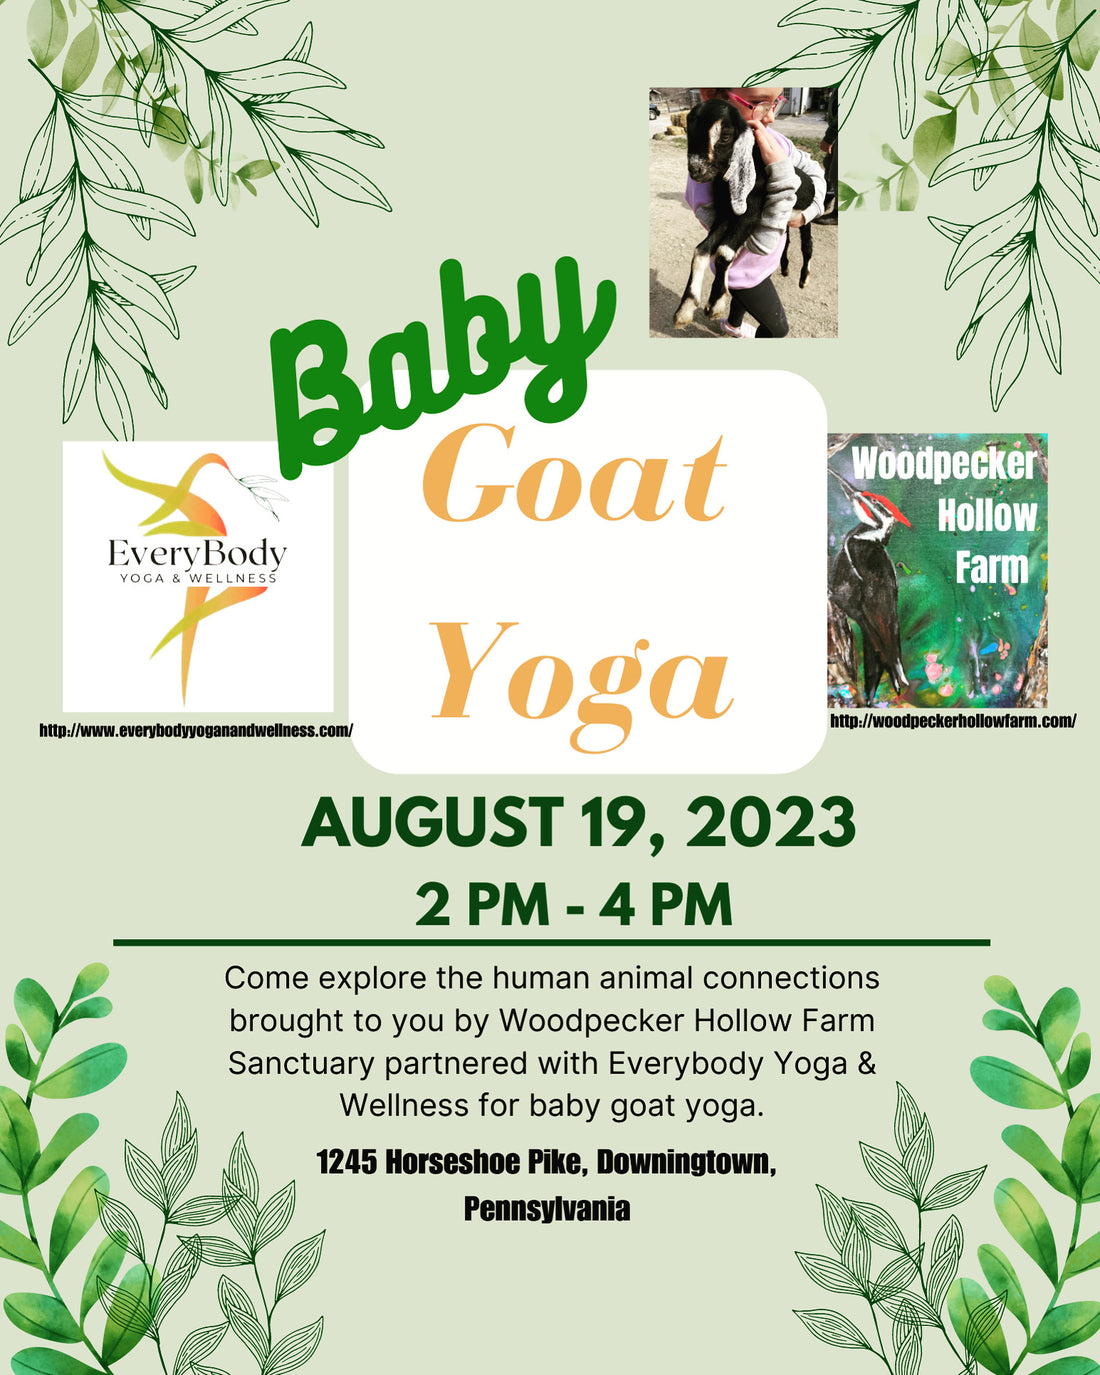 Baby Goat yoga coming soon!